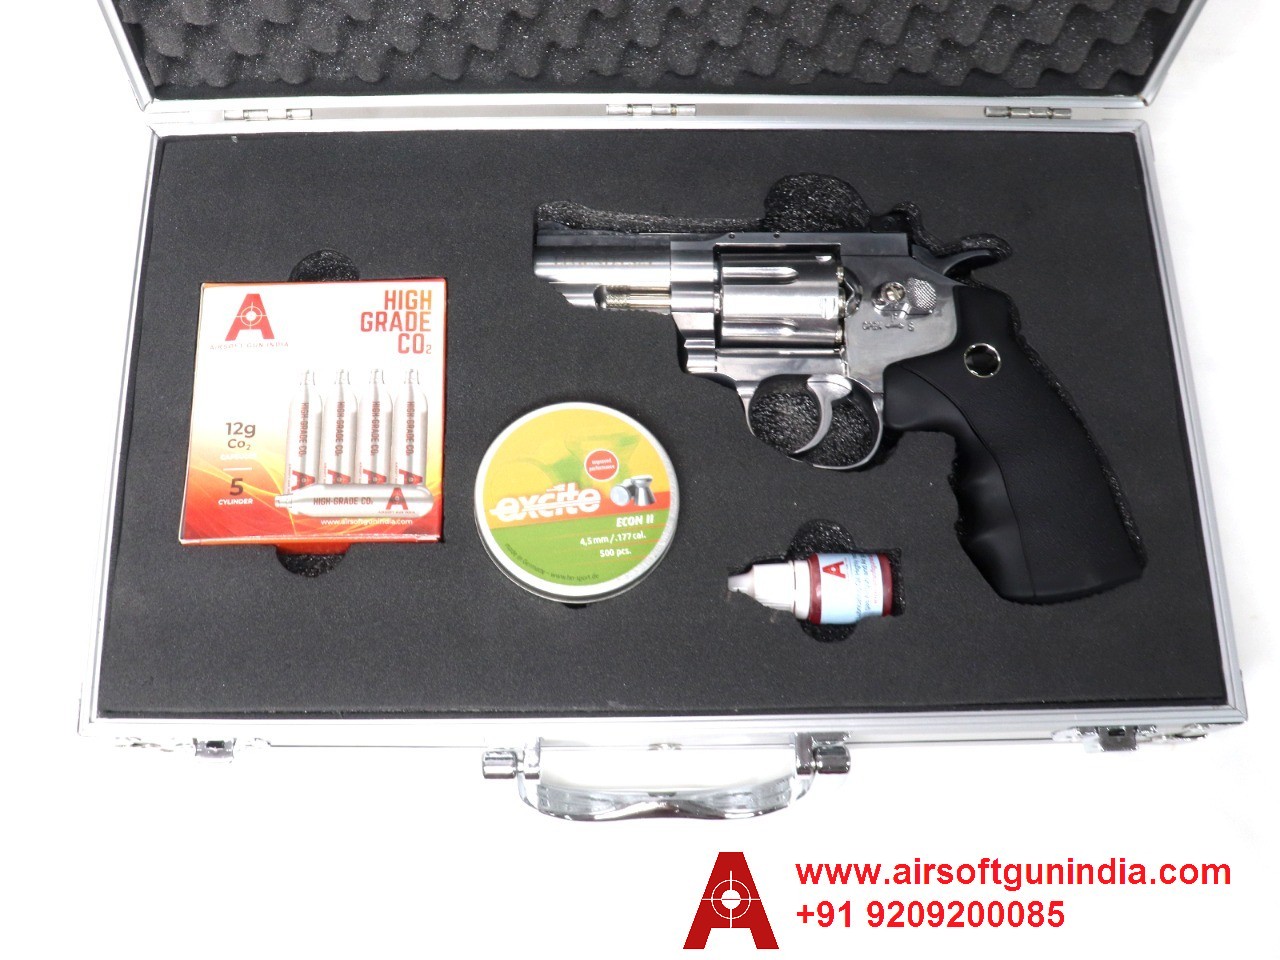 Customized Storage Metal Gun Box/ Gun Case For Legends S-25 Co2 Pellet Air Revolver By Airsoft Gun India